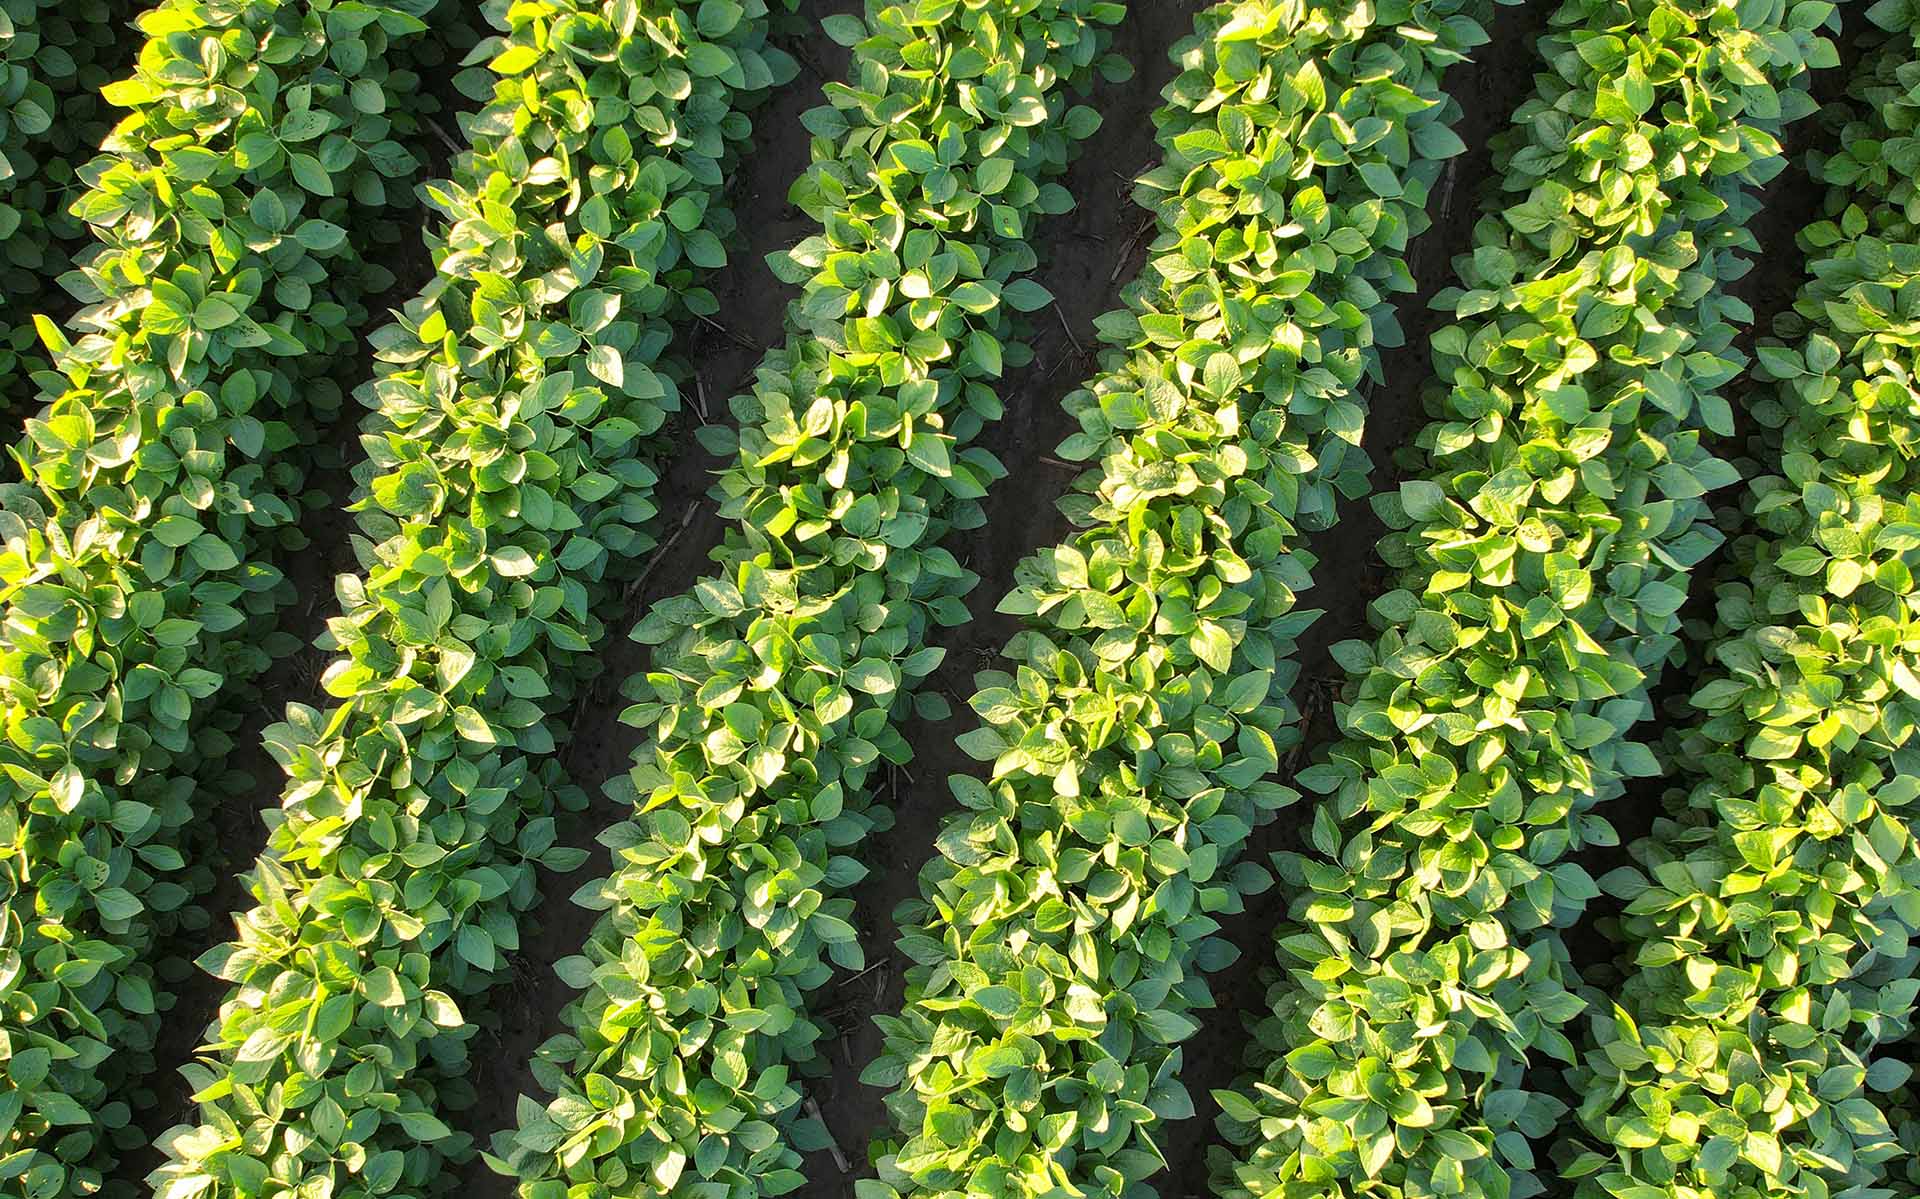 Soybean rows form an aerial view